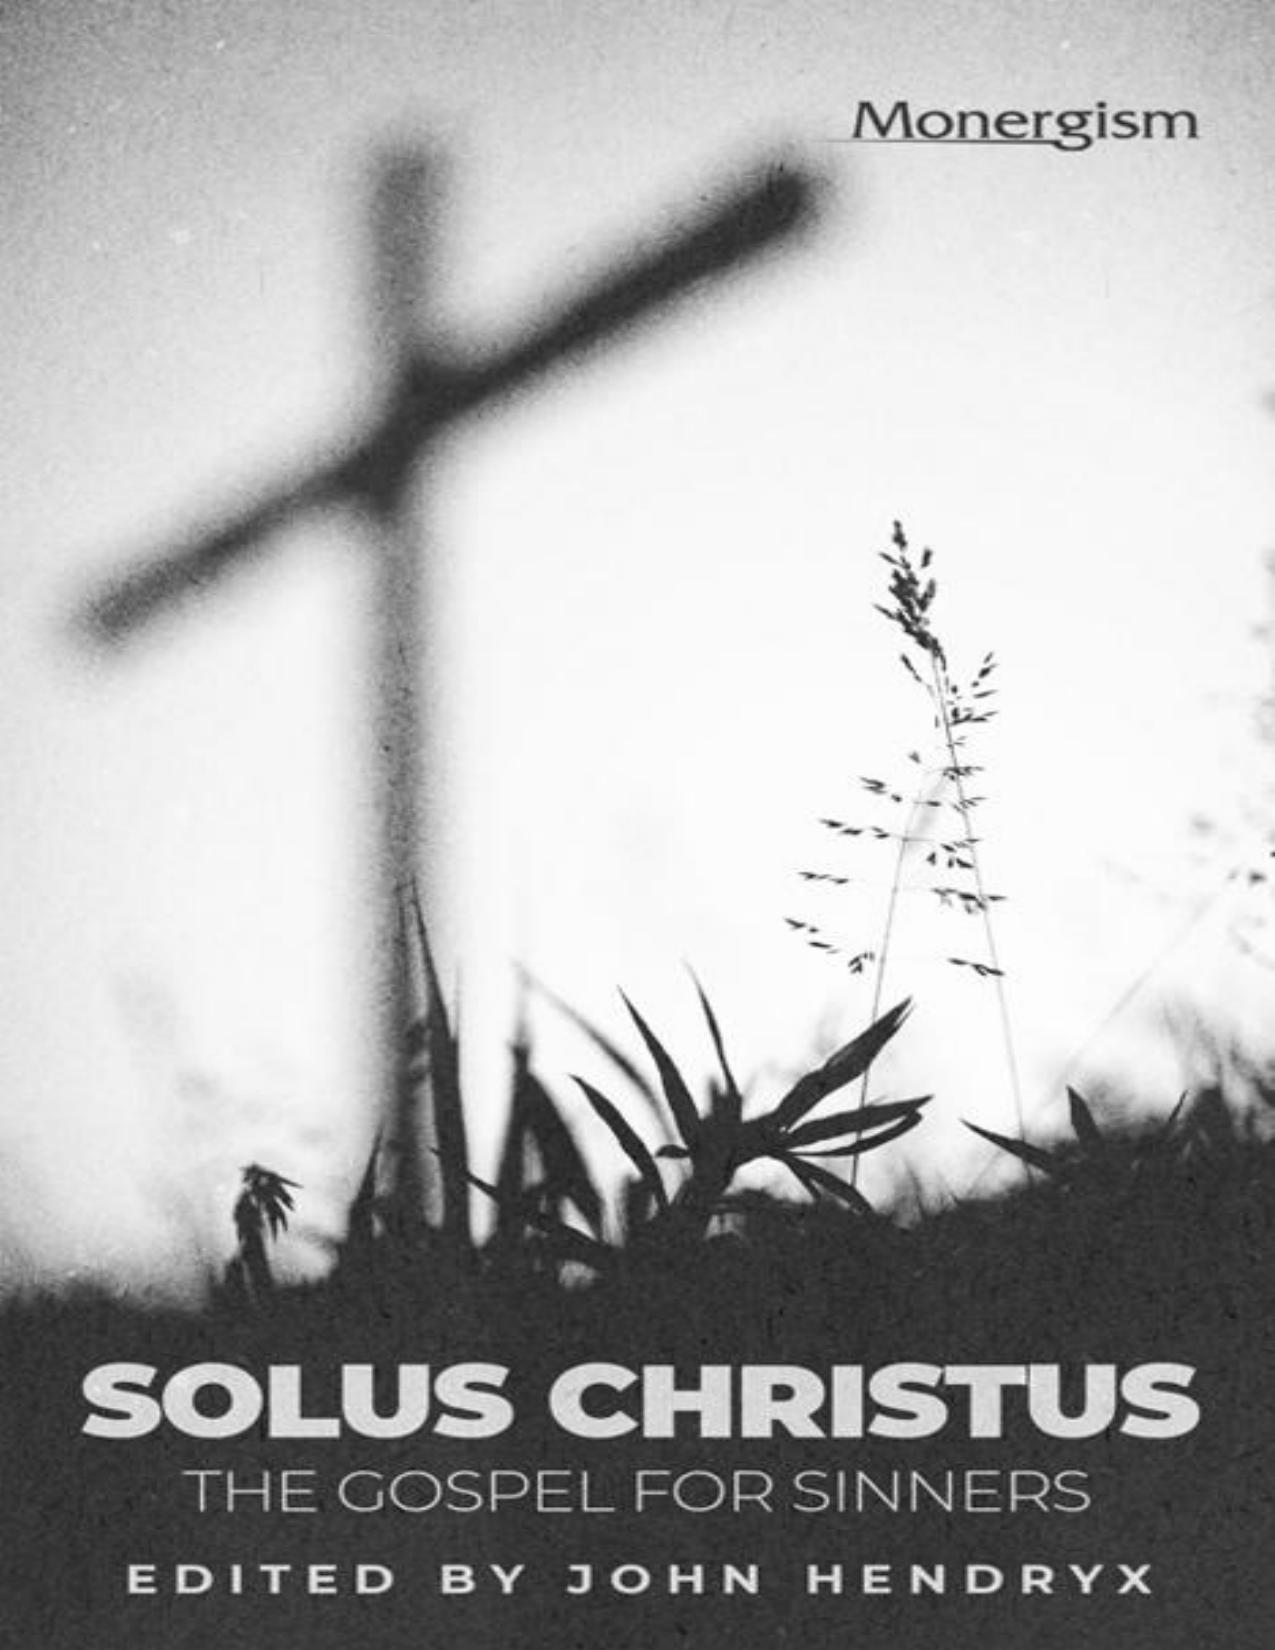 Solus Christus: The Gospel for Sinners